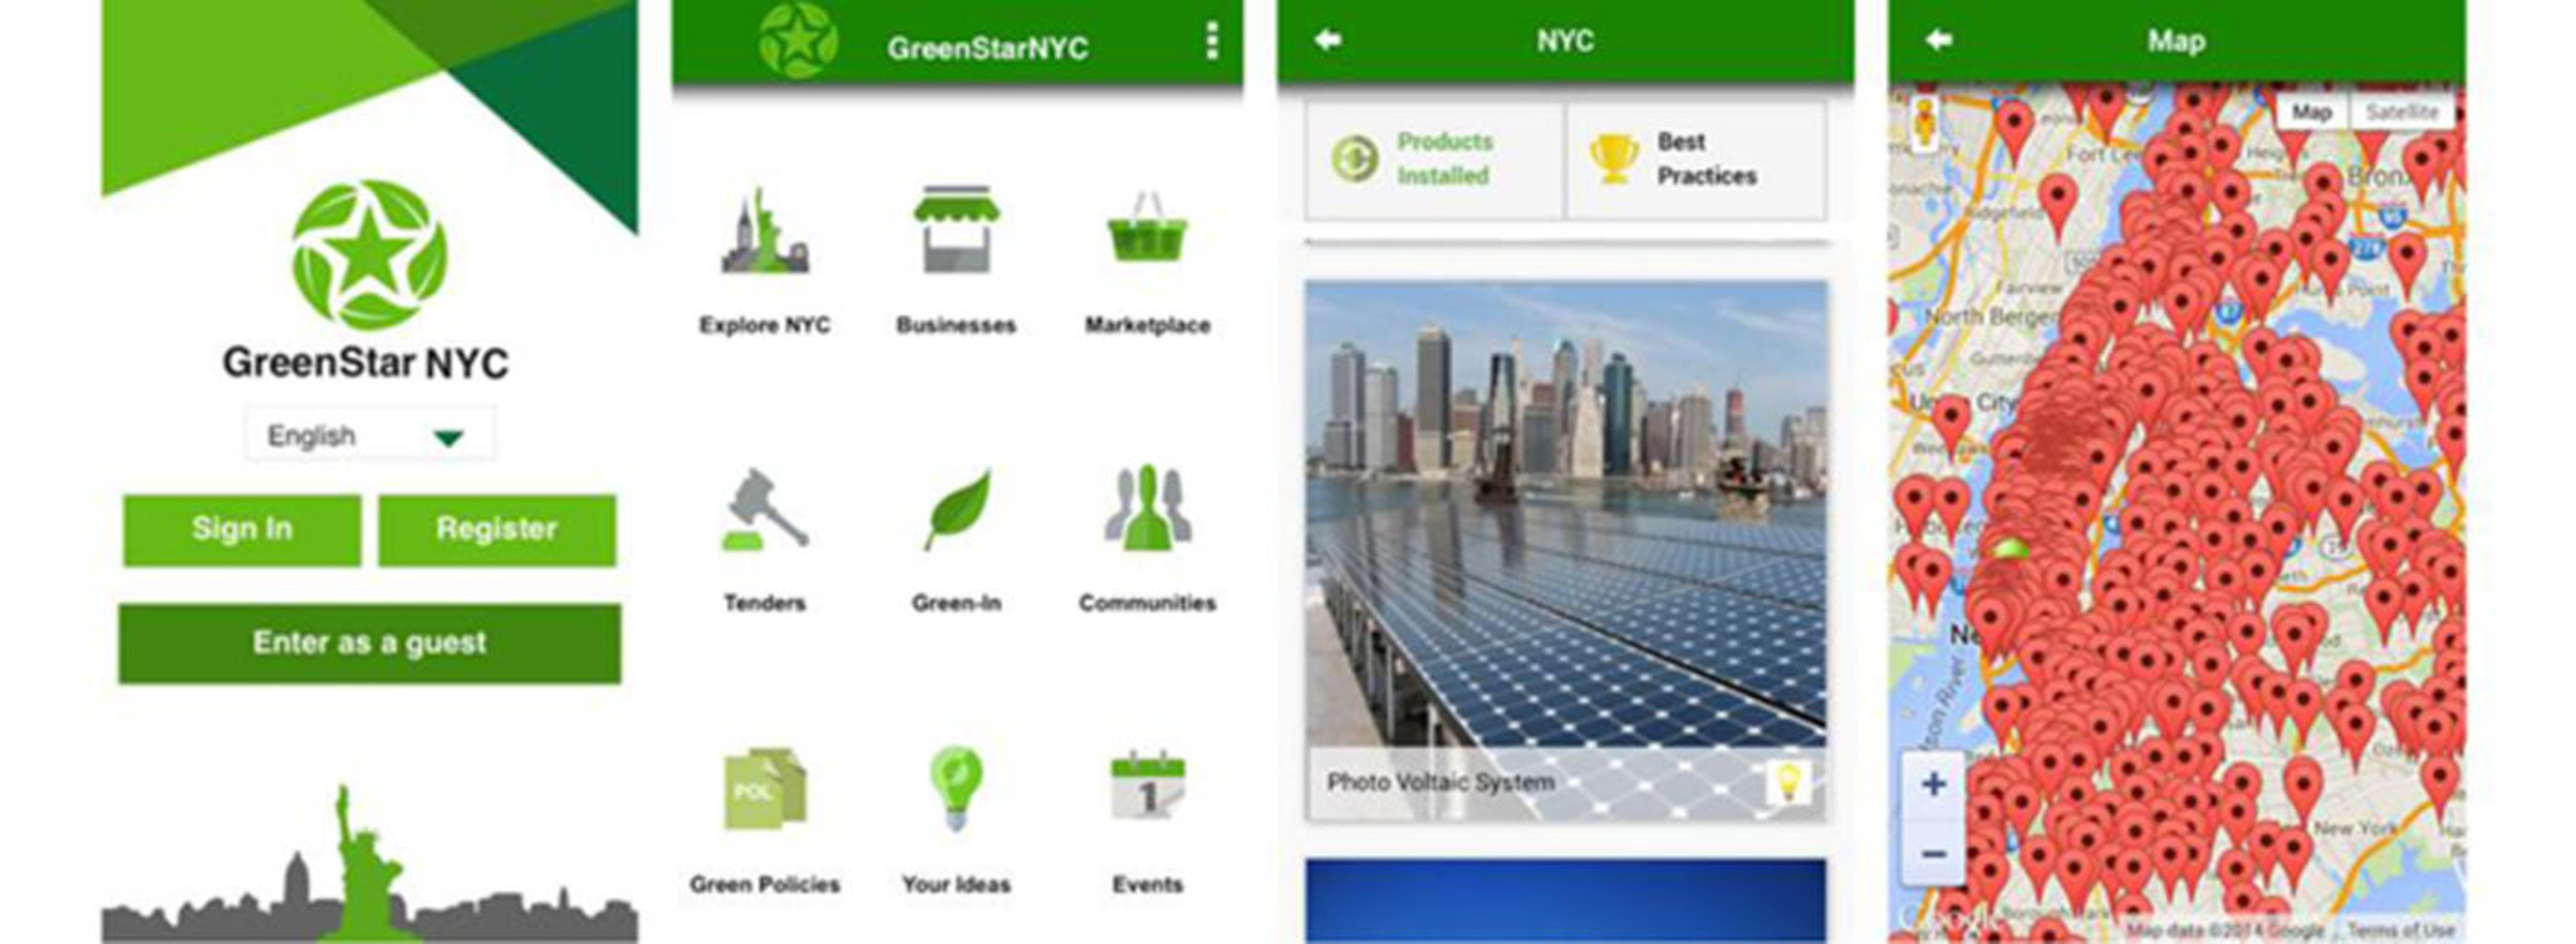 Screen shots of GreenStar NYC mobile app